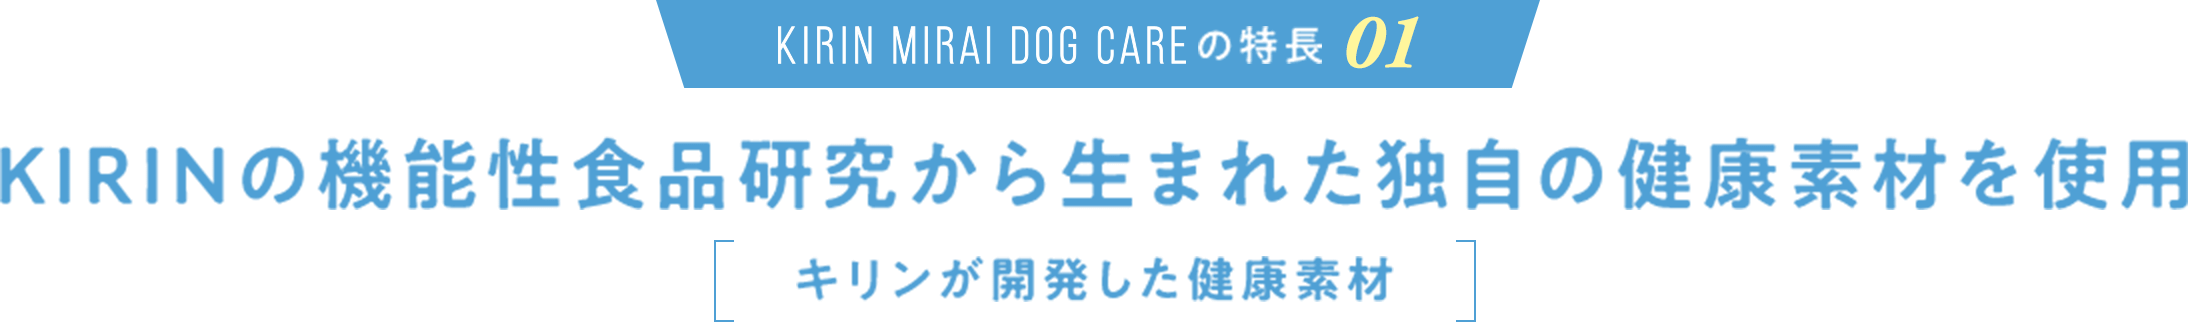 KIRIN MIRAI DOG CARE の特長01 KIRINの機能性食品研究から生まれた独自の健康素材を使用 キリンが開発したふたつの健康素材